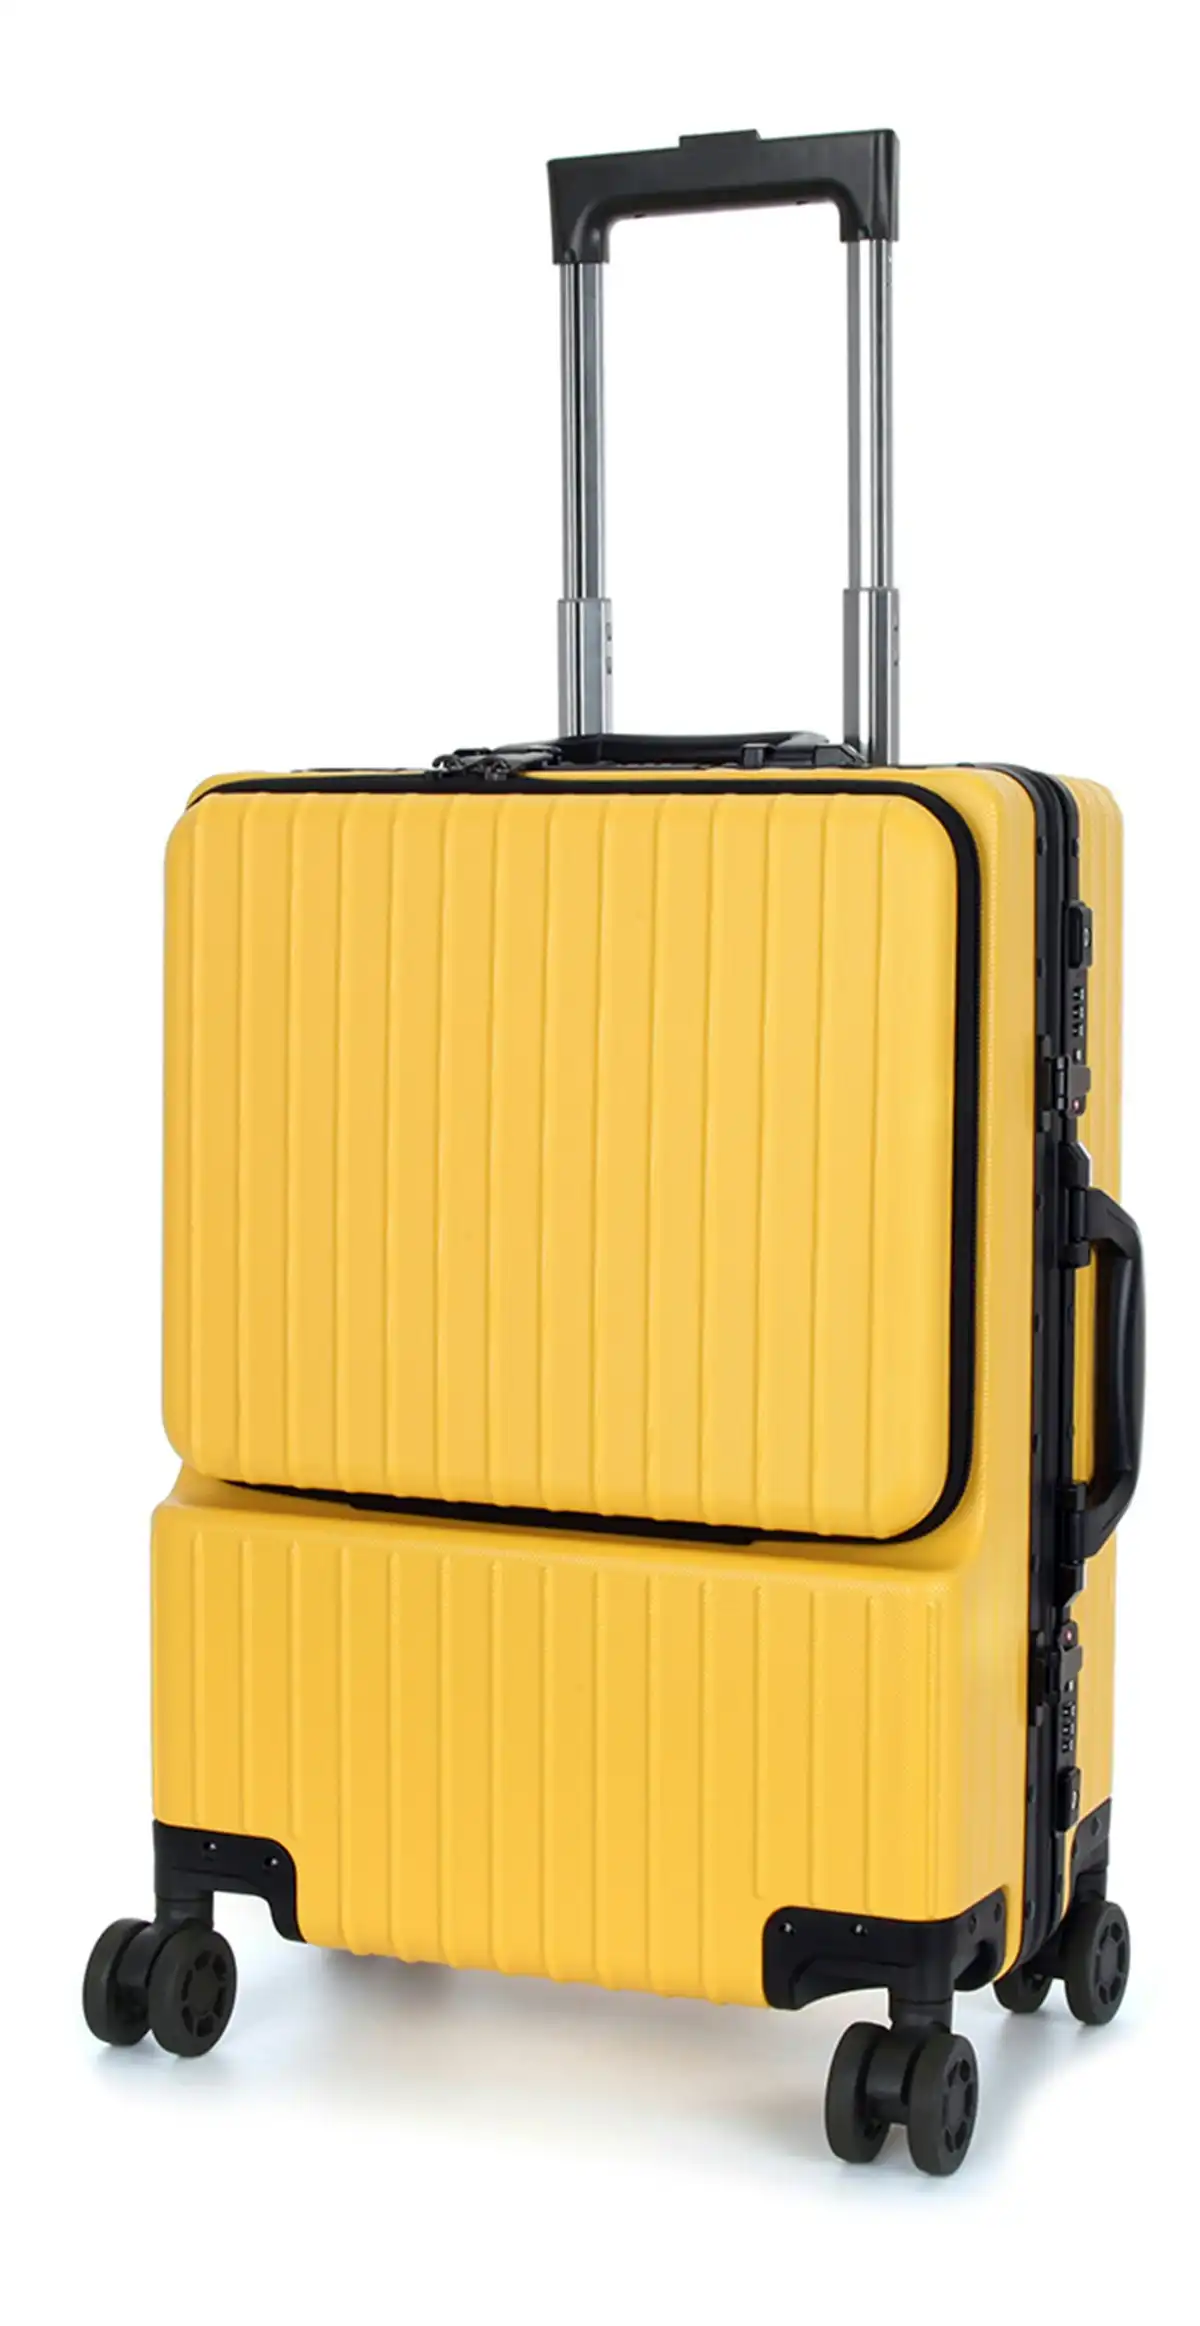 Suissewin Swiss Aluminium Luggage Suitcase Lightweight With TSA Locker 8 Wheels Carry on Hardcase SN8610A Yellow